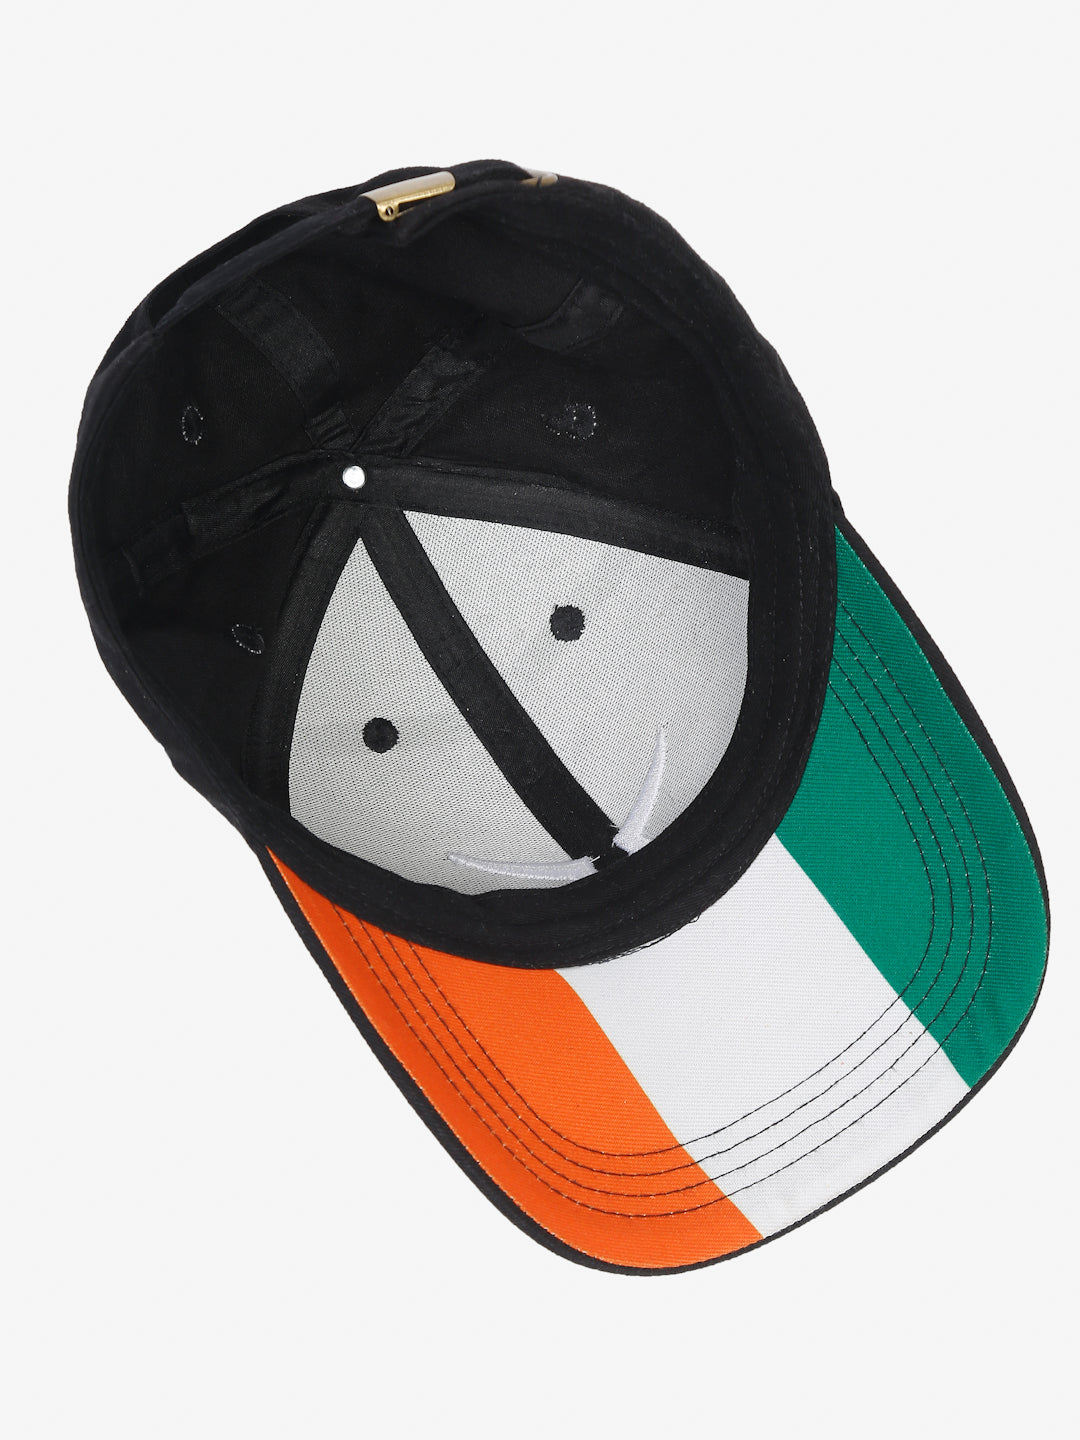 Invincible India Limited Edition Unisex Baseball Caps